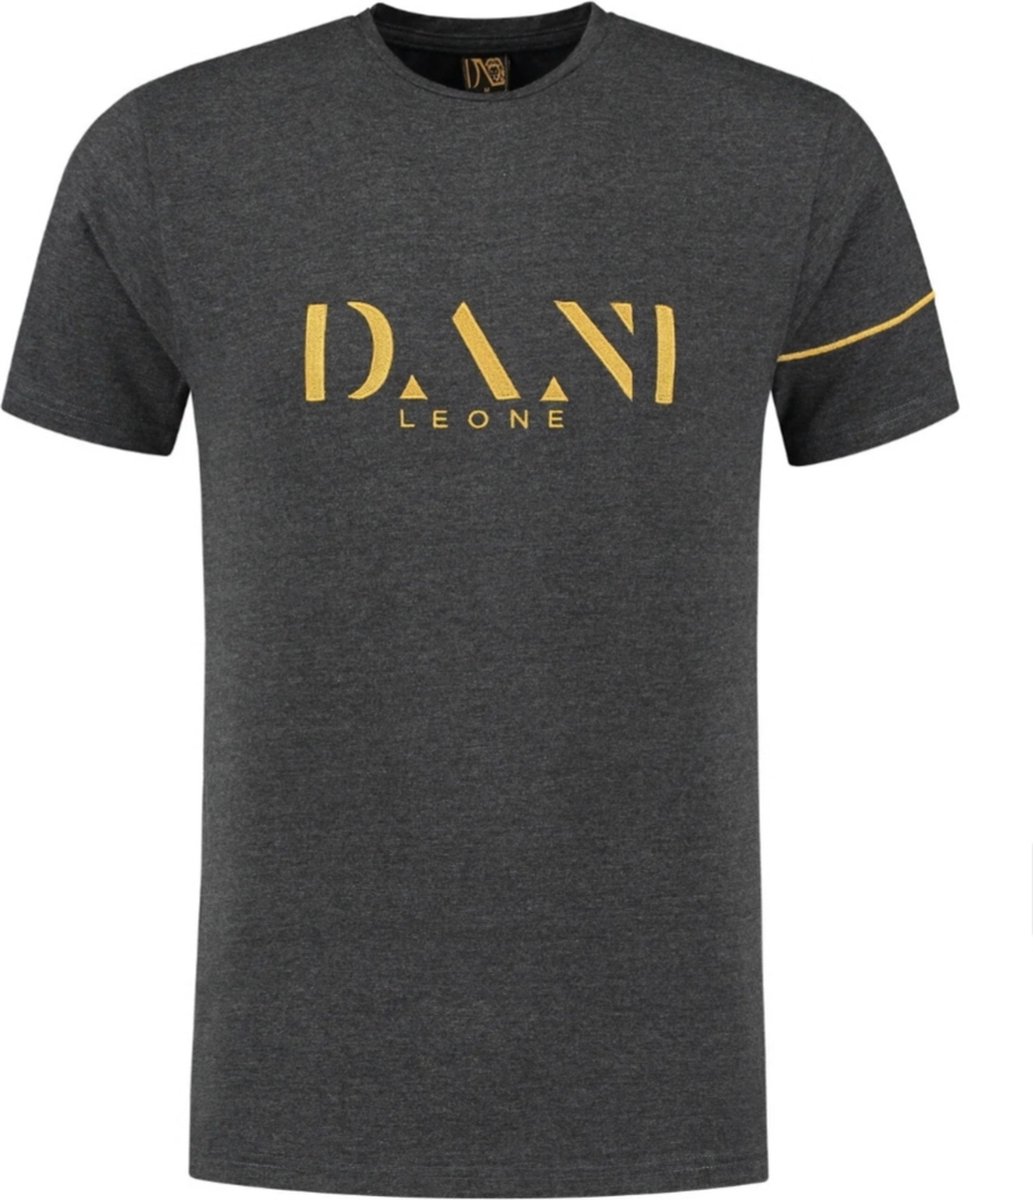 Dani leone t-shirt gold edition (M) grey